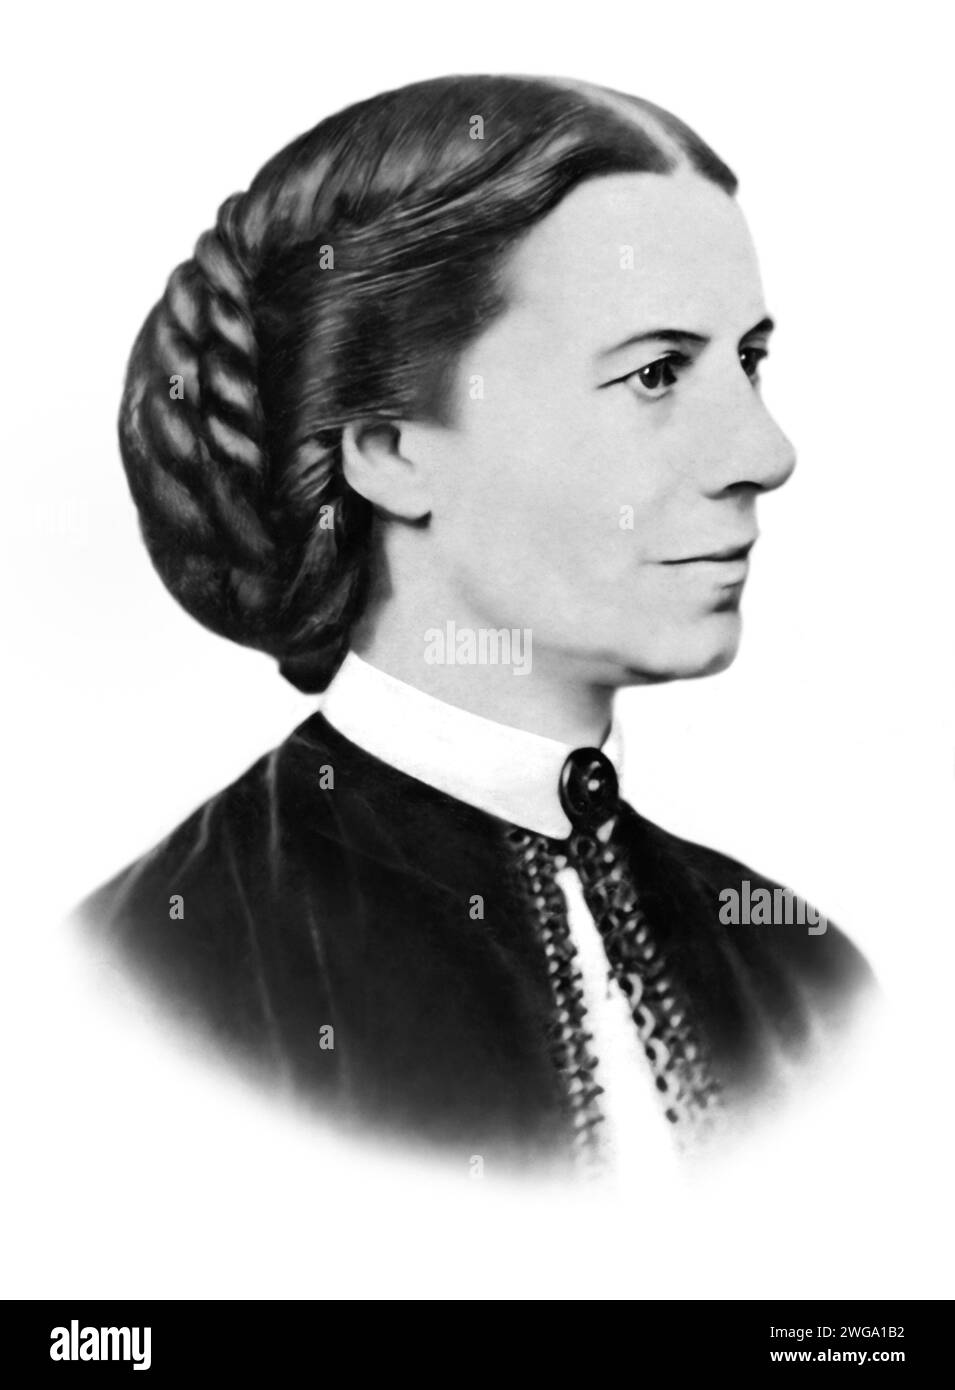 Clara (Clarissa Harlowe) Barton (1821-1912), self-taught American nurse who founded the American Red Cross. Stock Photo